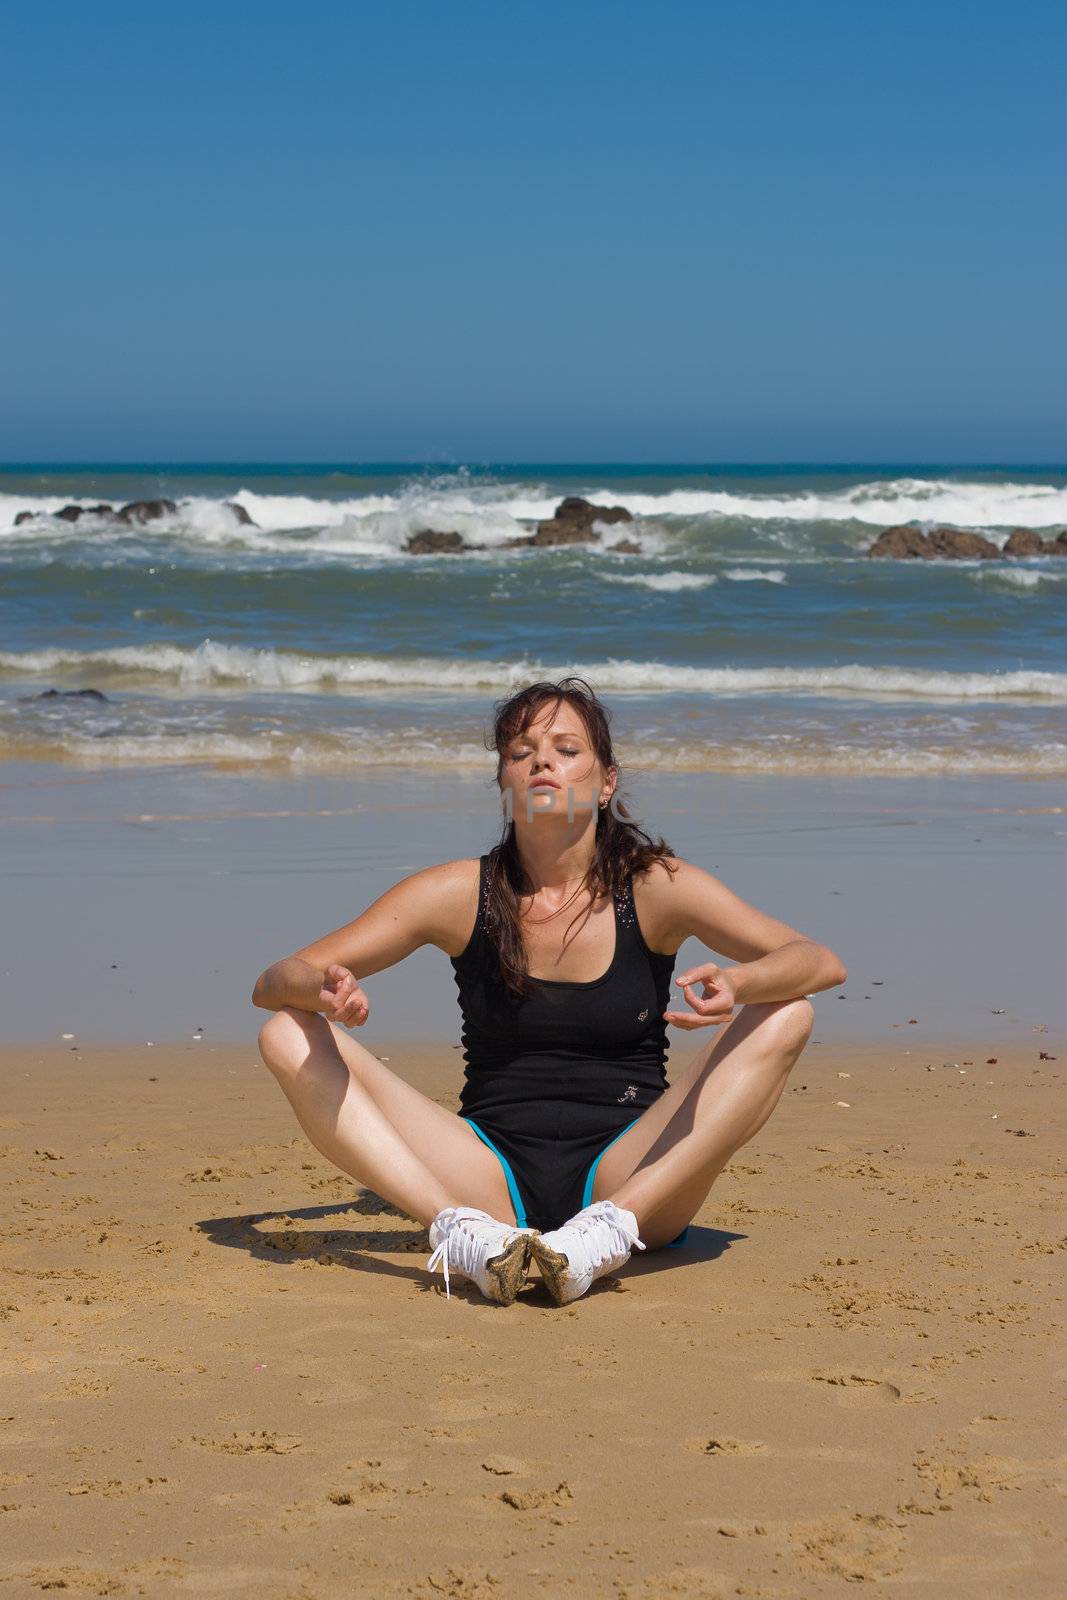 Yoga fitness model meditating on the beach